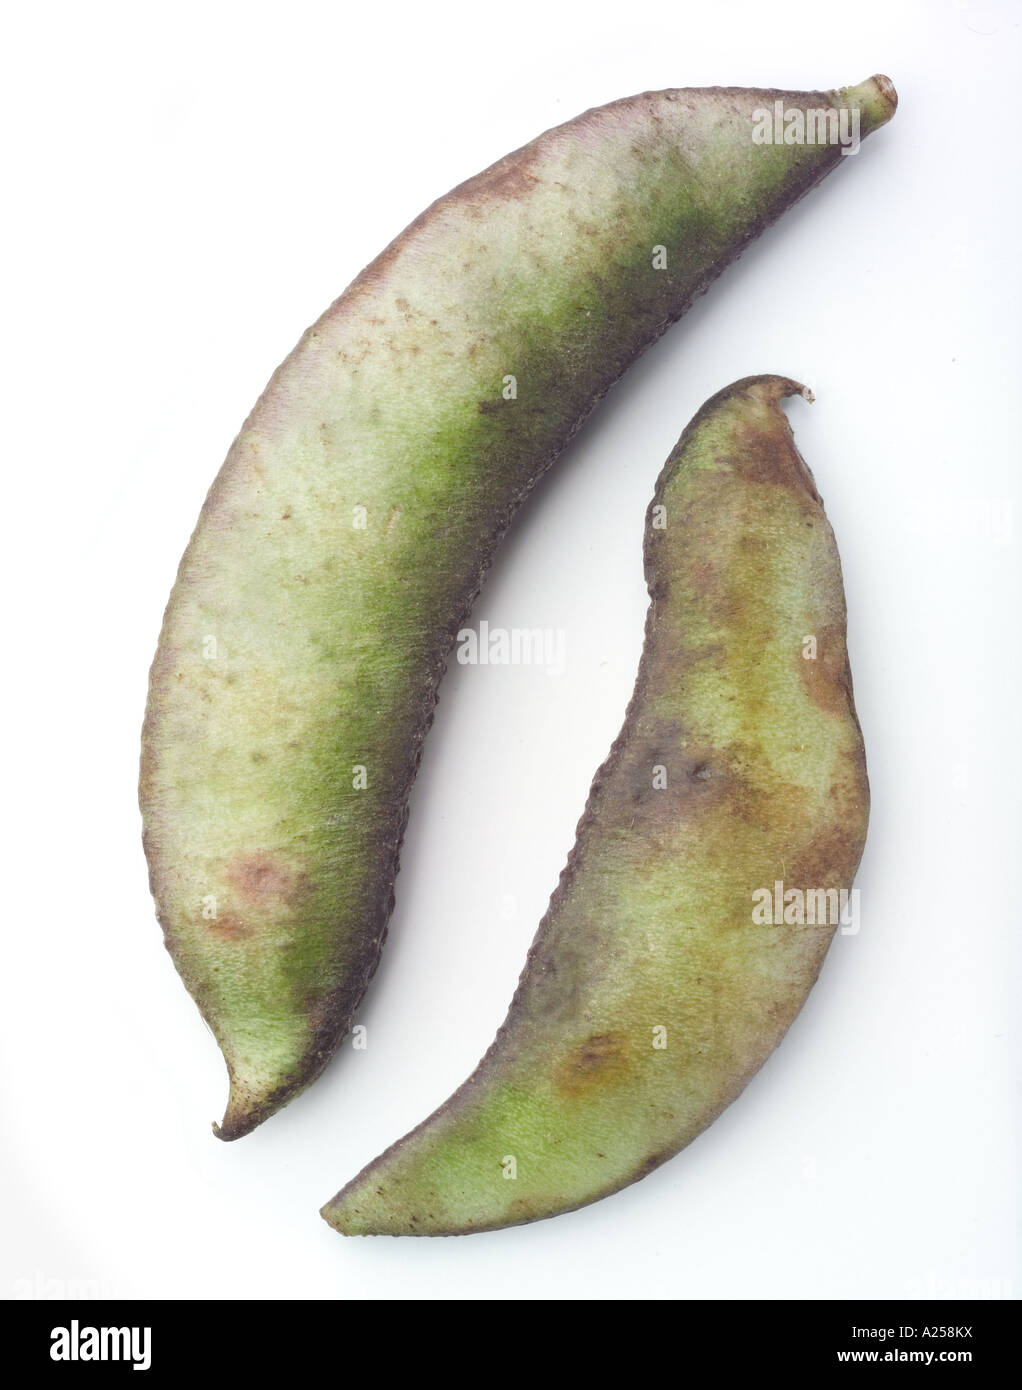 beans called seem in bangladeshi Stock Photo